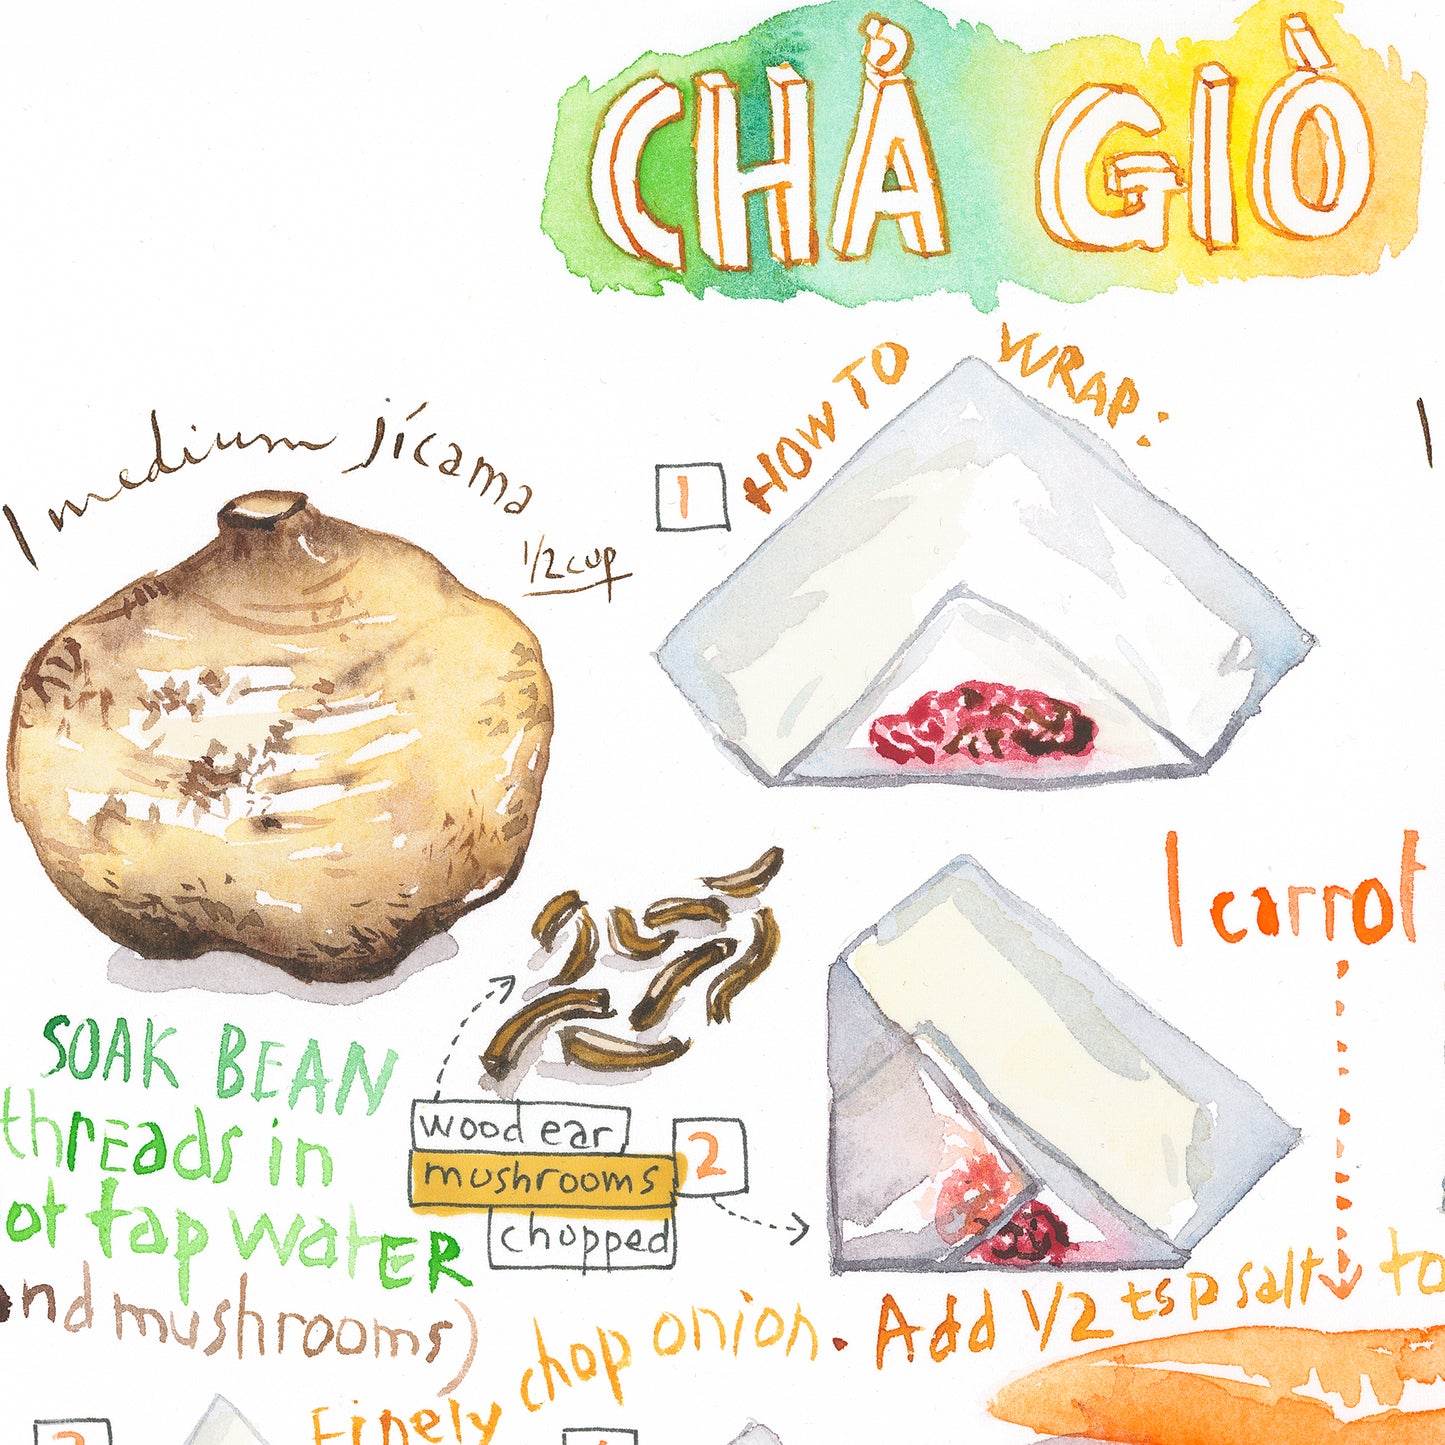 Cha Gio recipe - Original watercolor painting